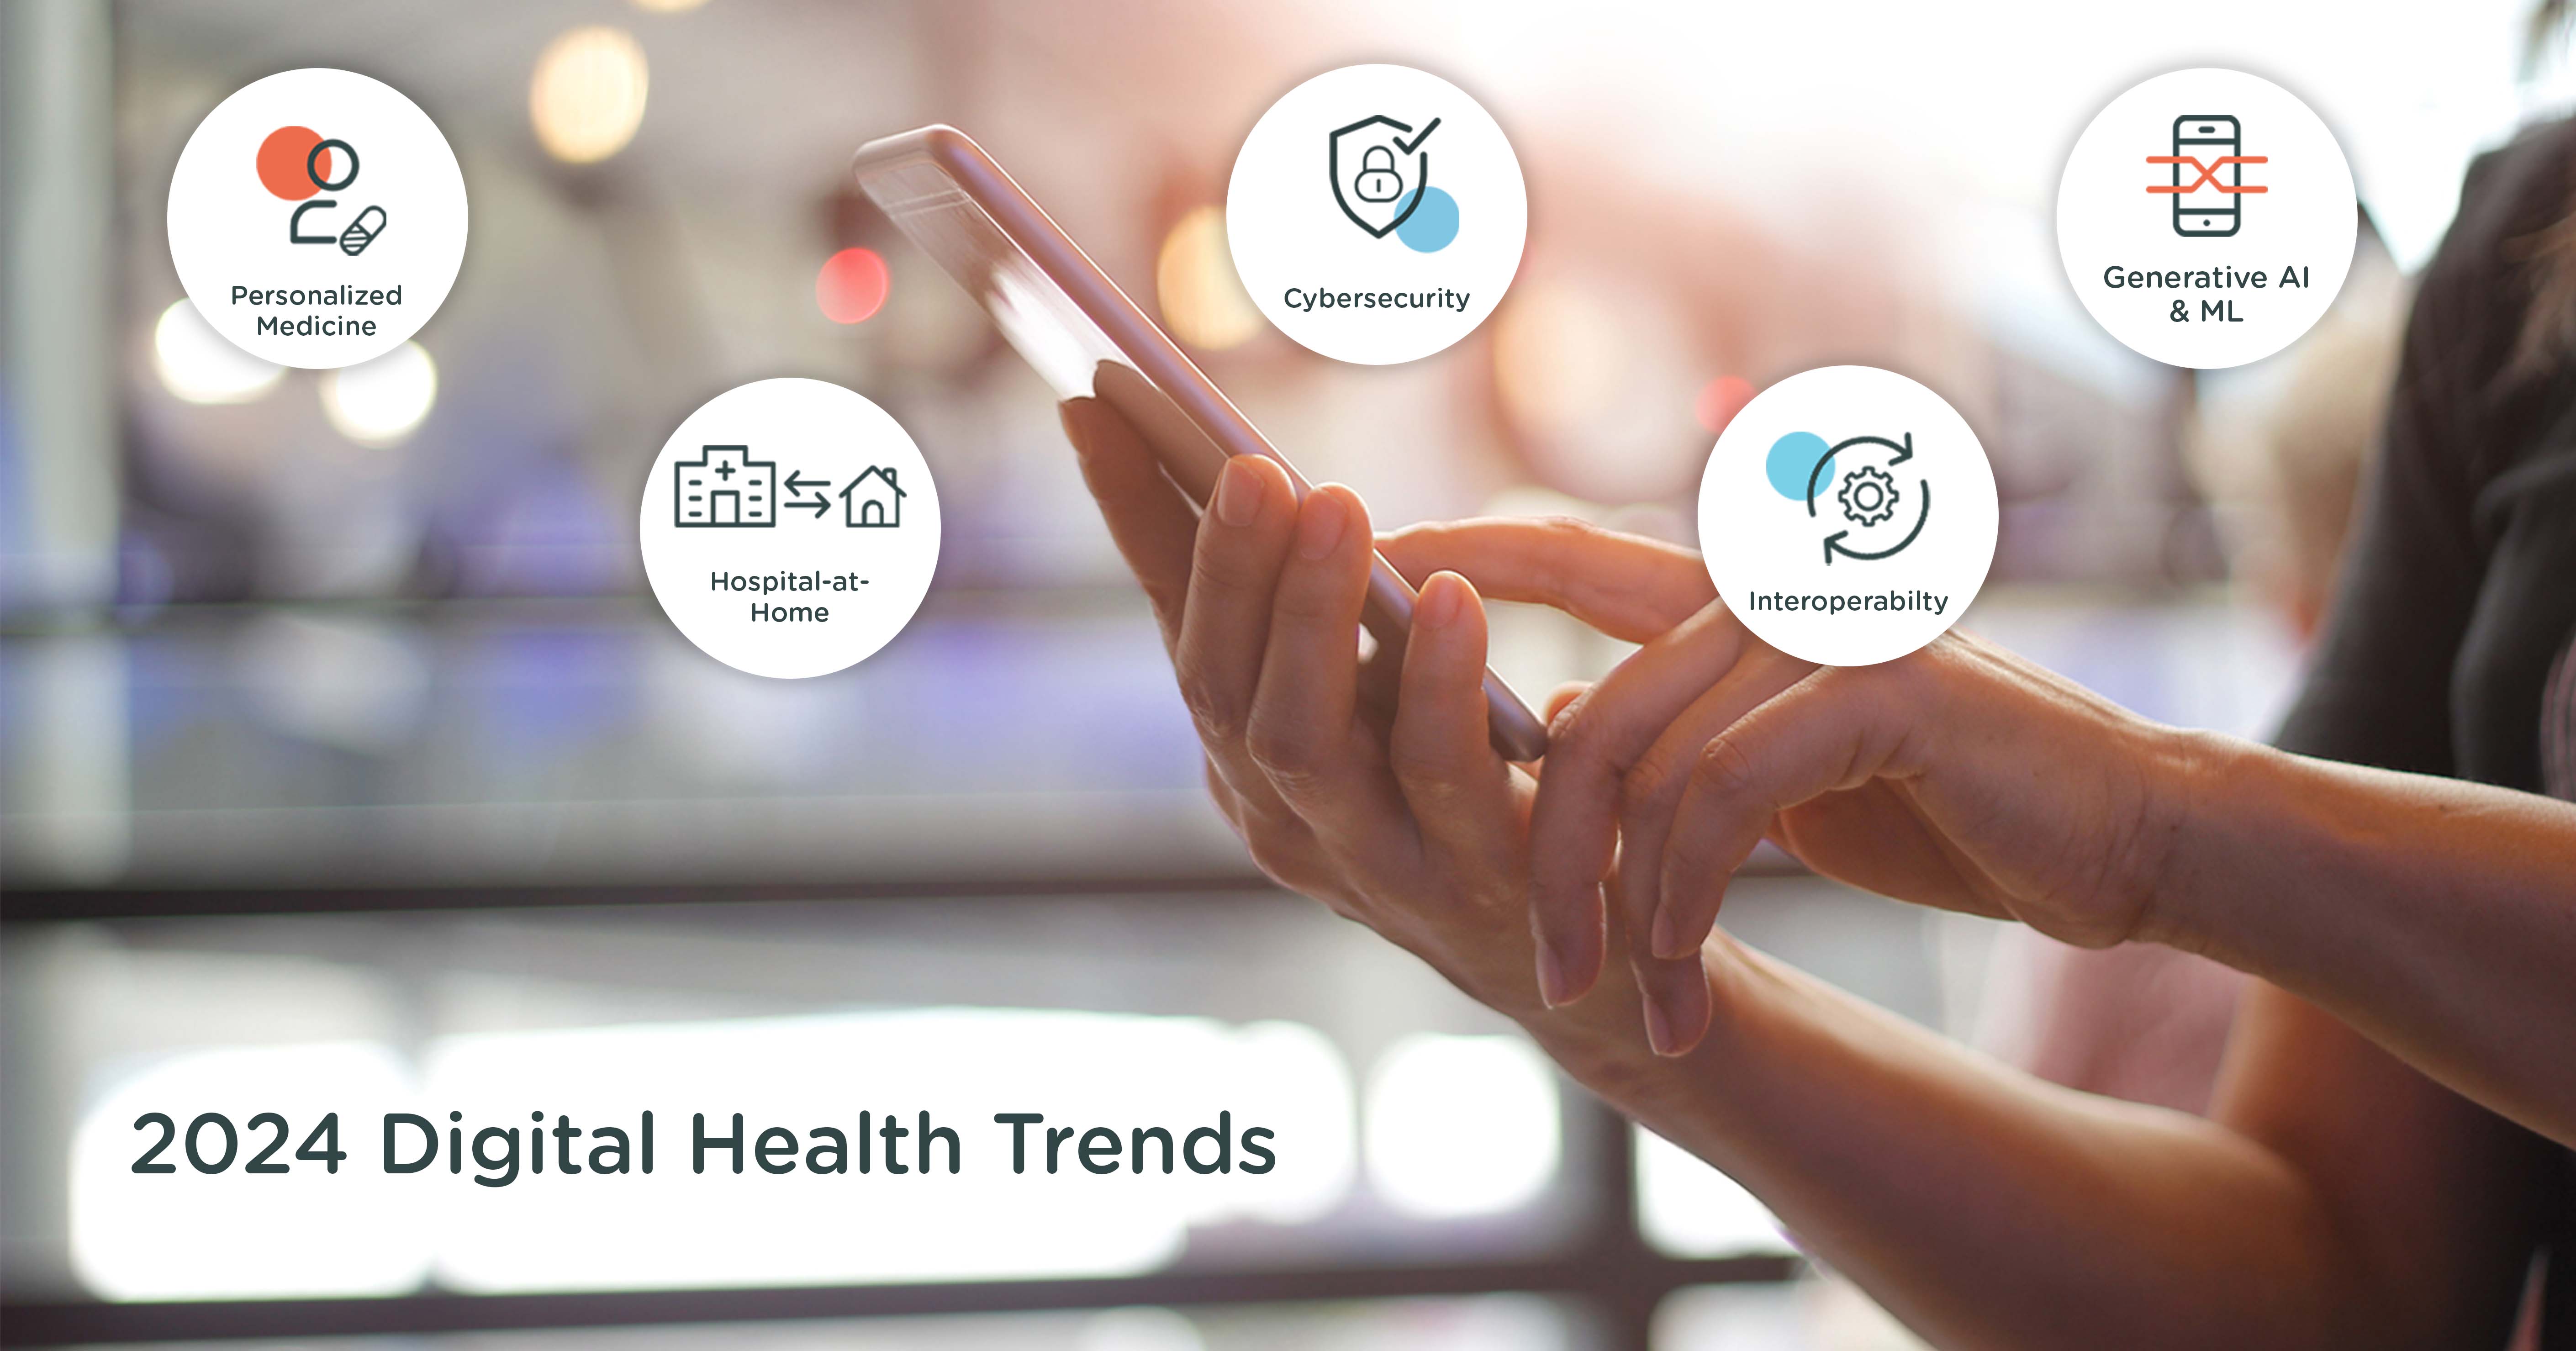 Digital Health Trends in 2024